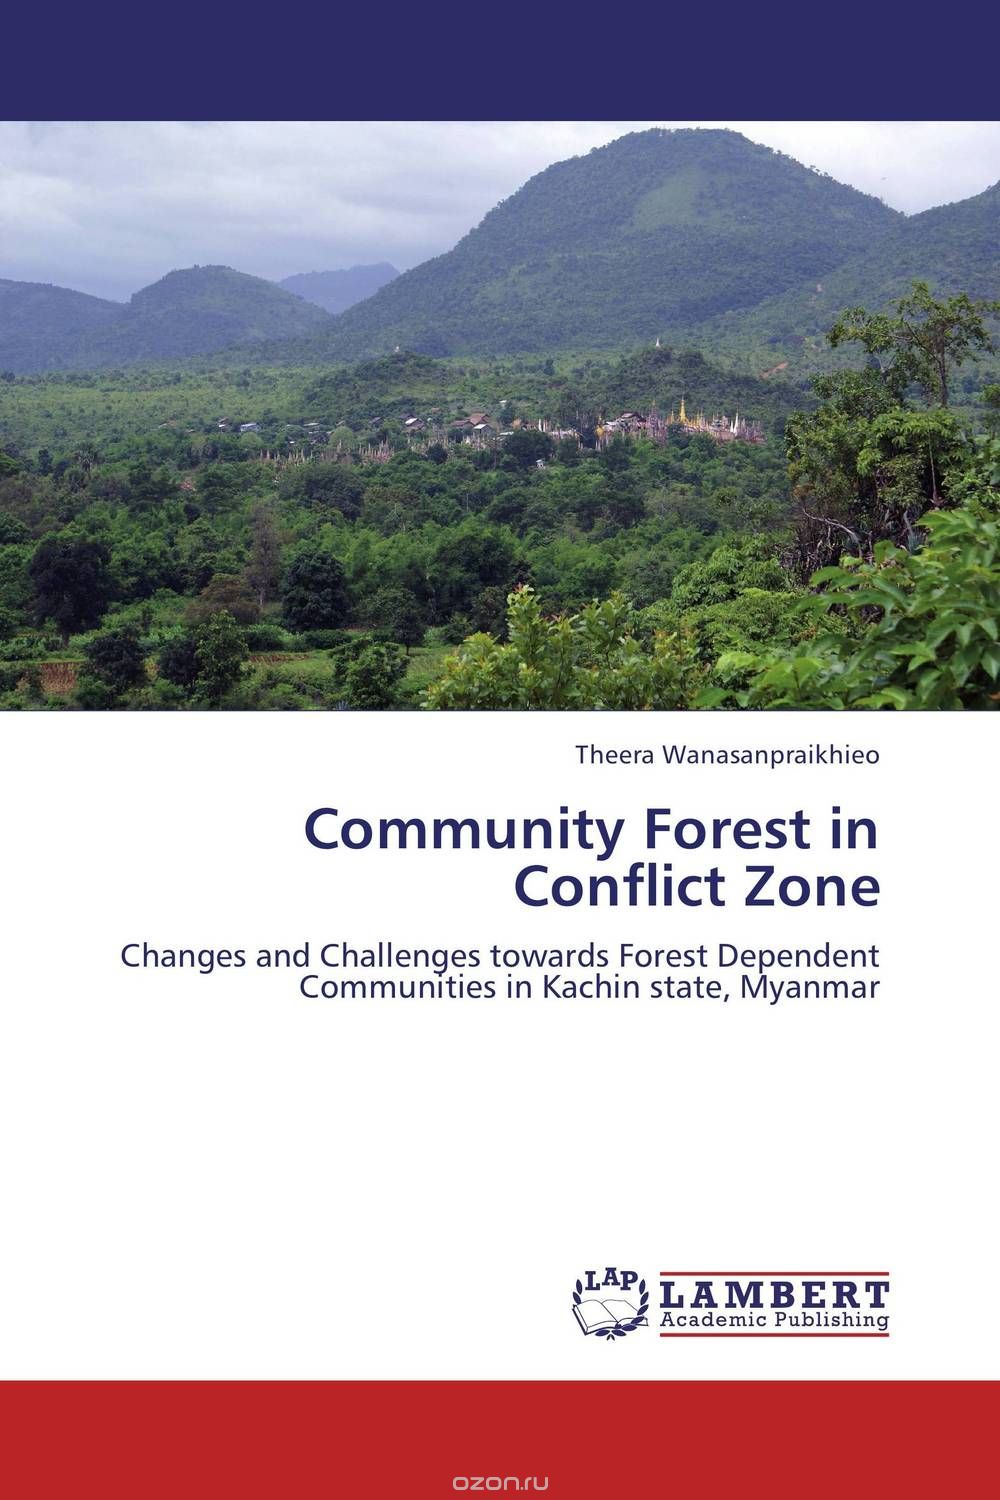 Скачать книгу "Community Forest in Conflict Zone"